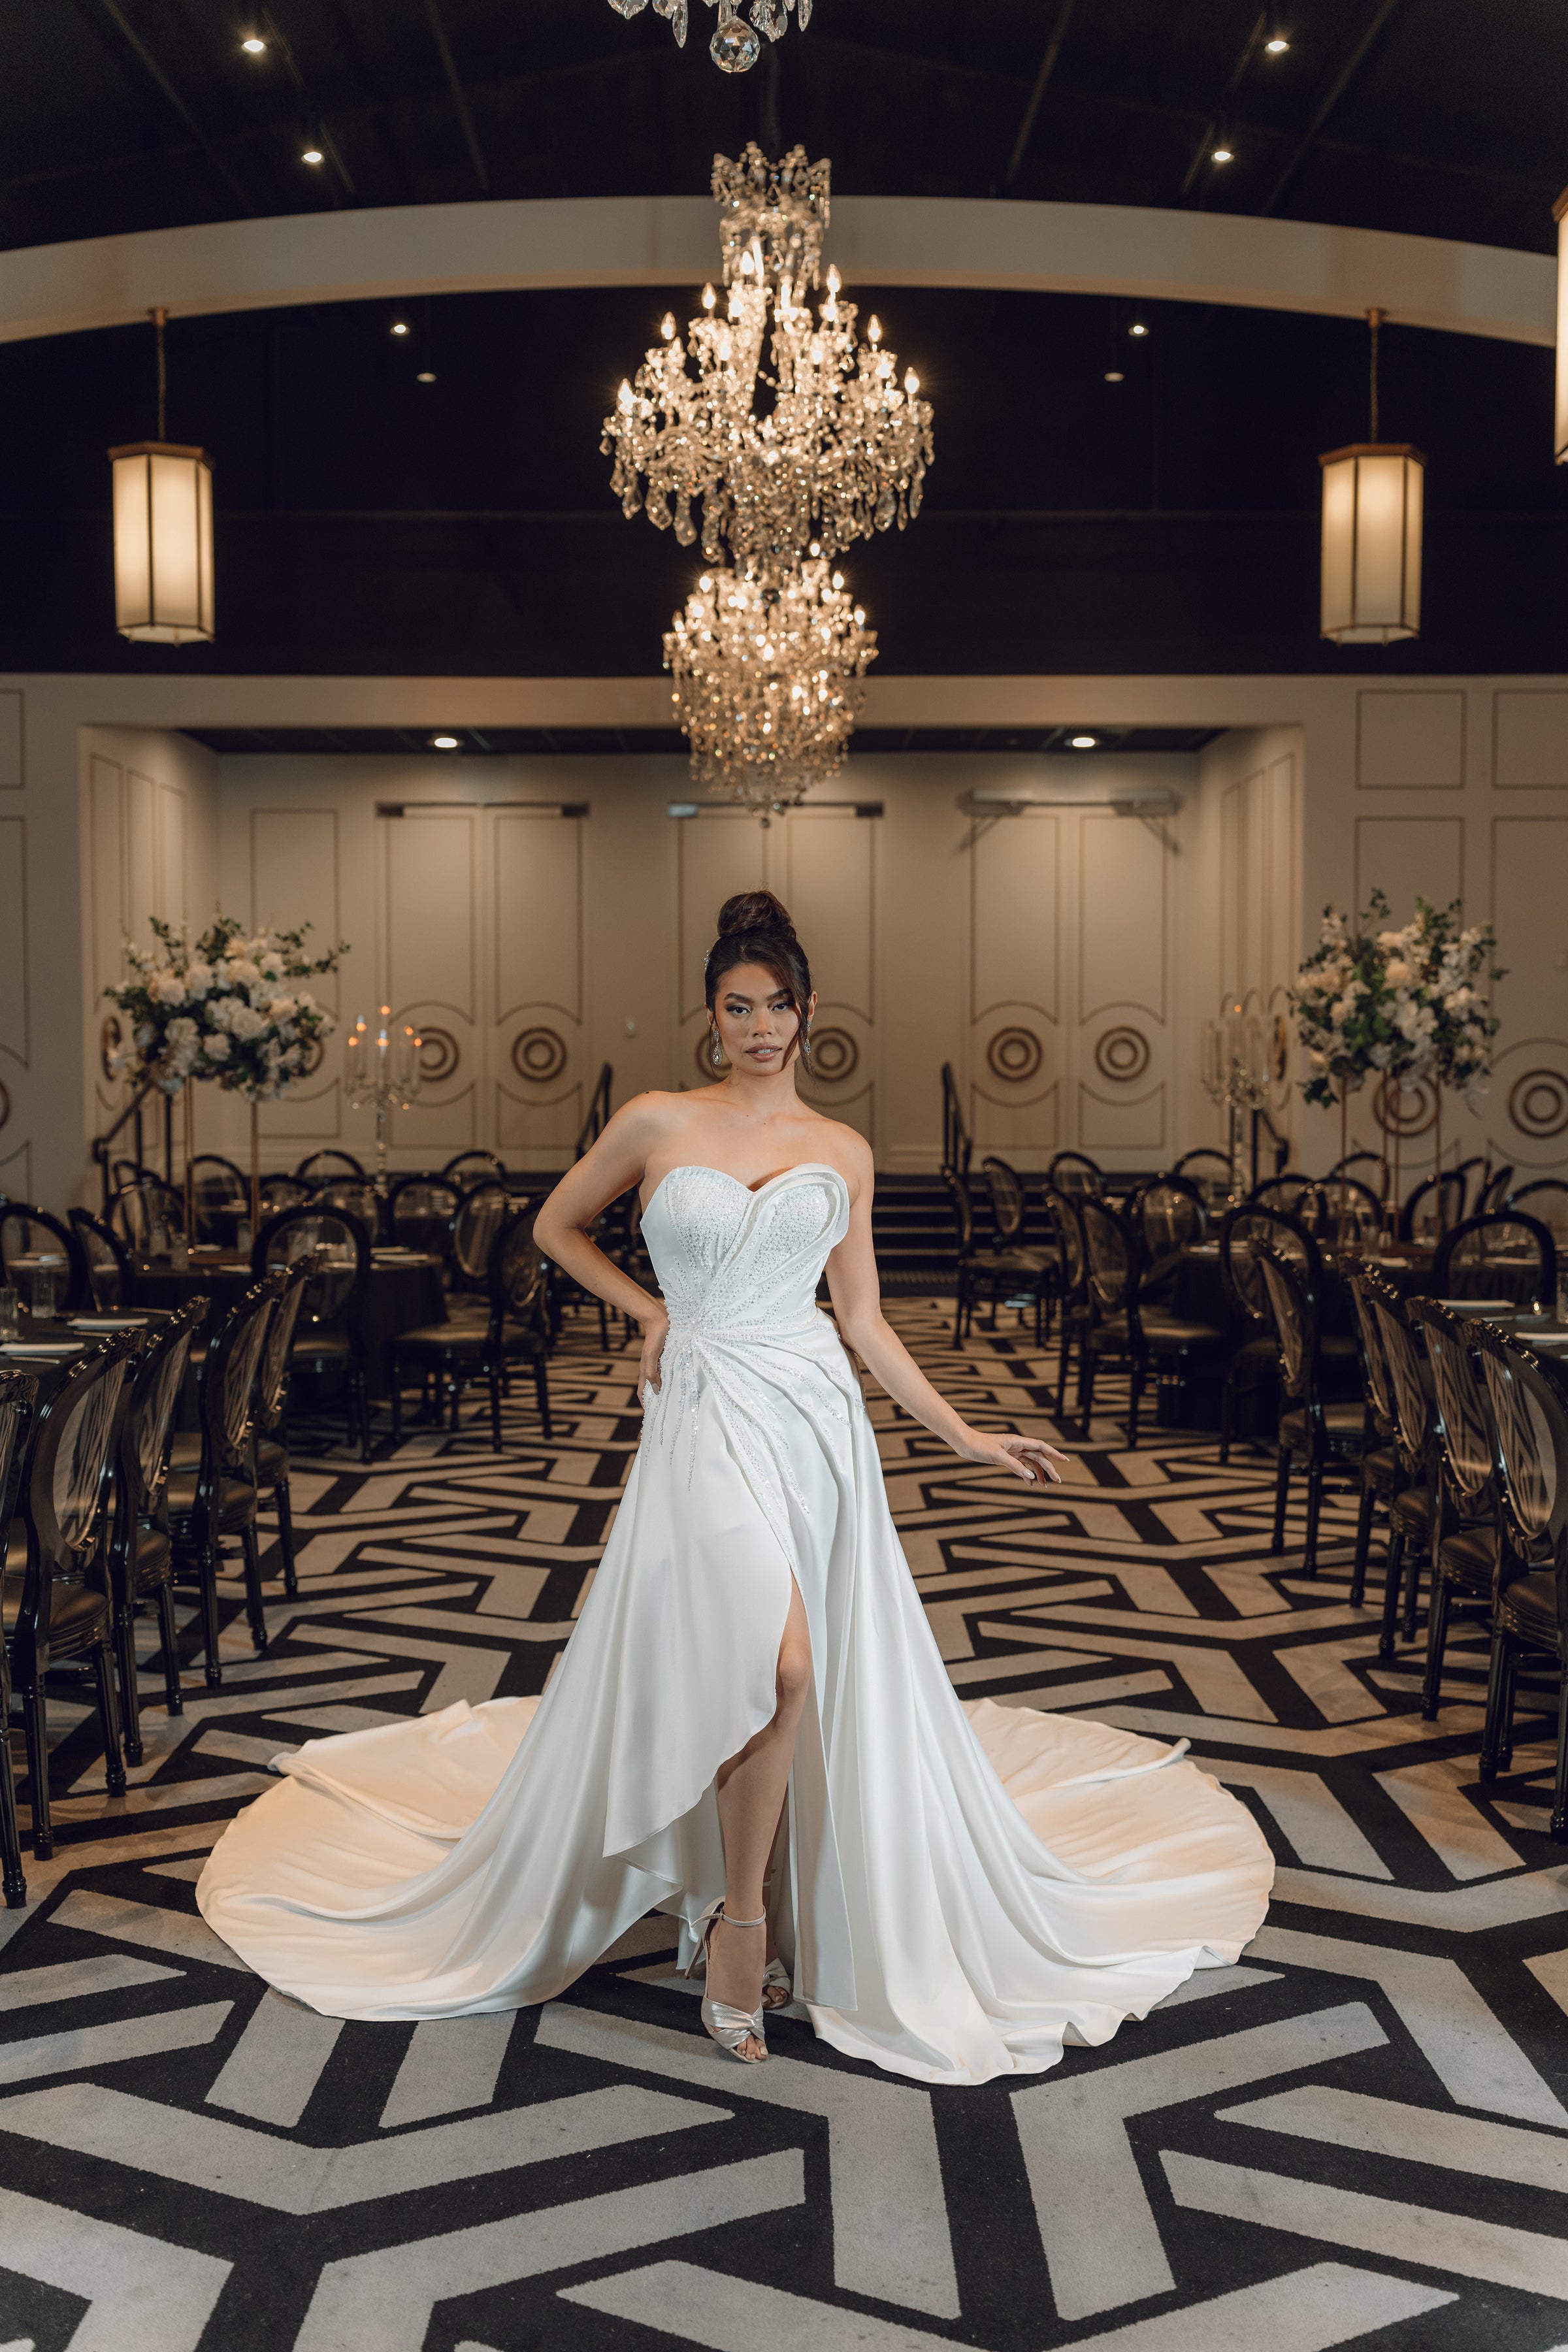 Designer Dresses For Weddings & Special Occasions